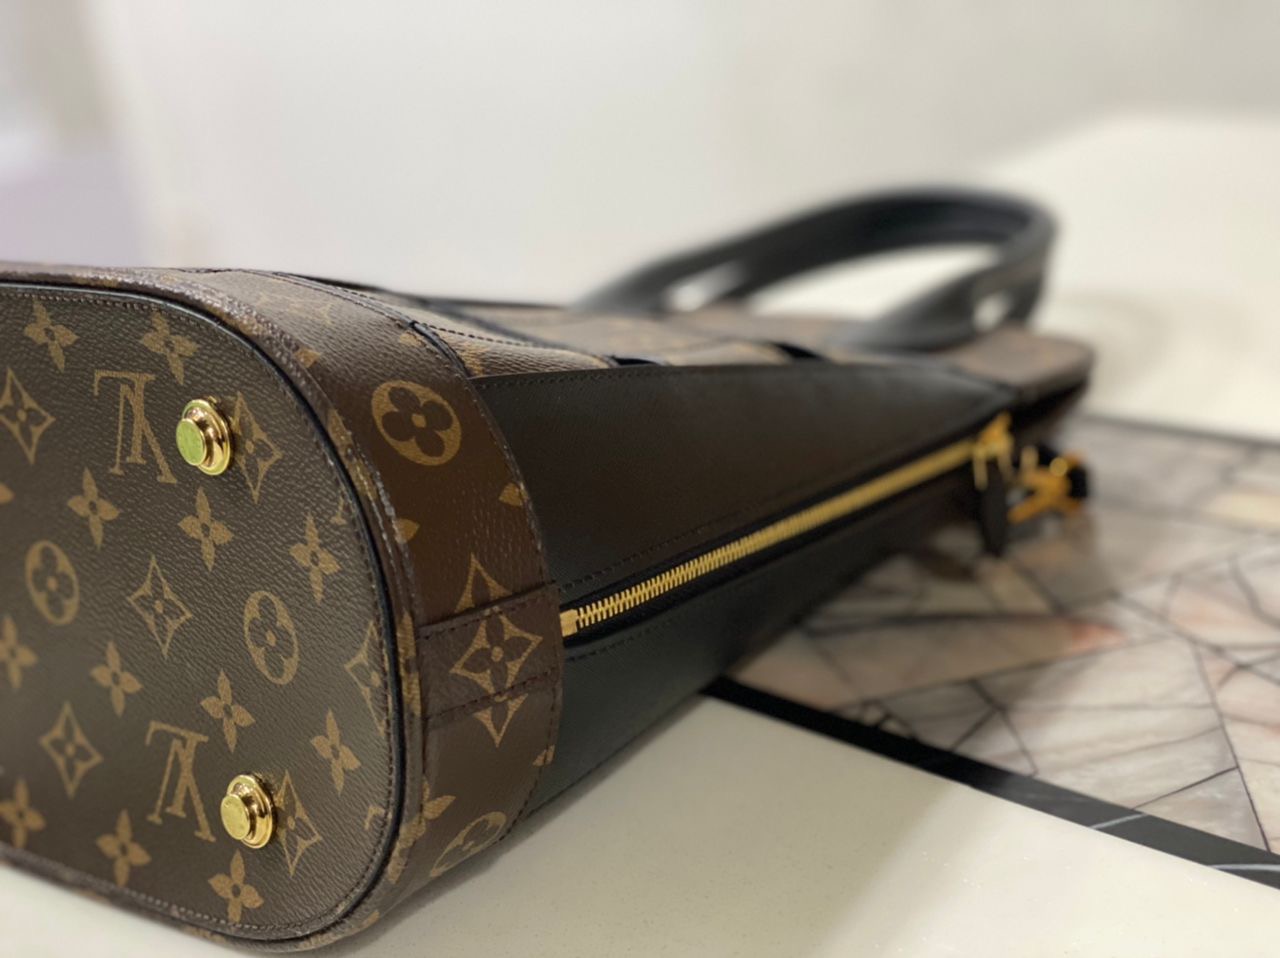 Louis Vuitton Monogram Tressage Tote Bag